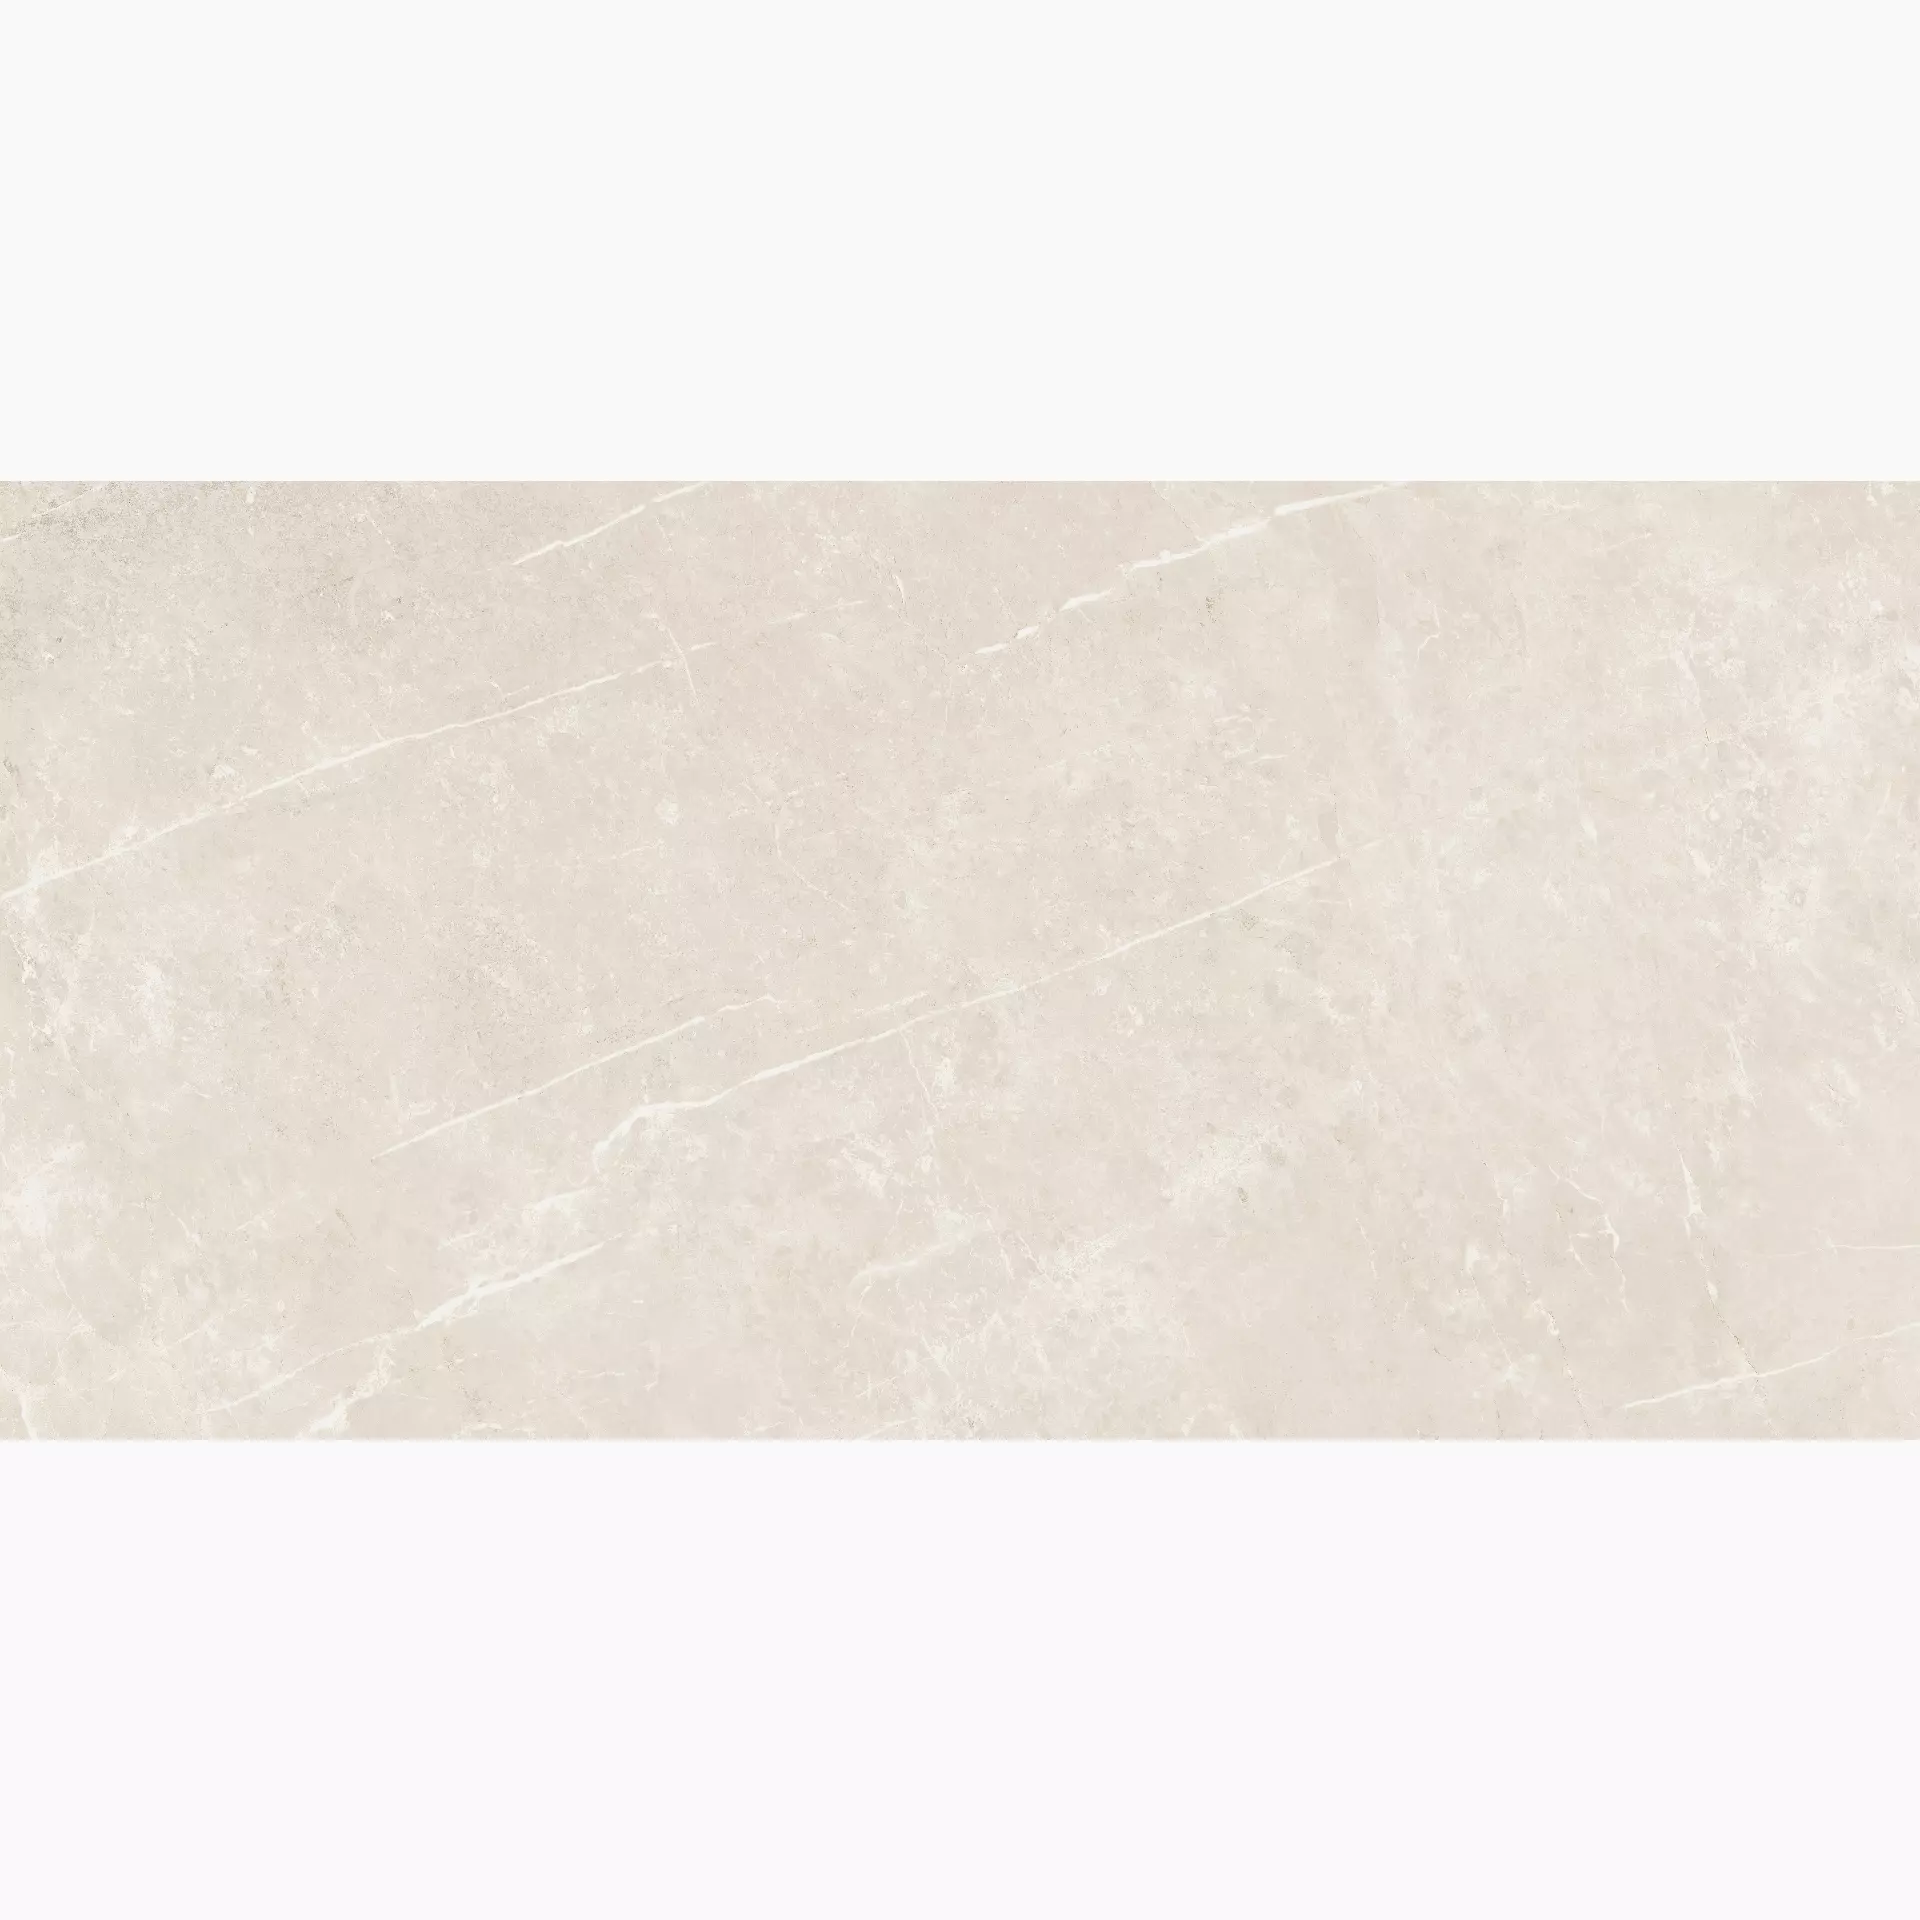 Florim Elemental Stone Of Cerim White Dolomia Lucido 766513 60x120cm rectified 9mm